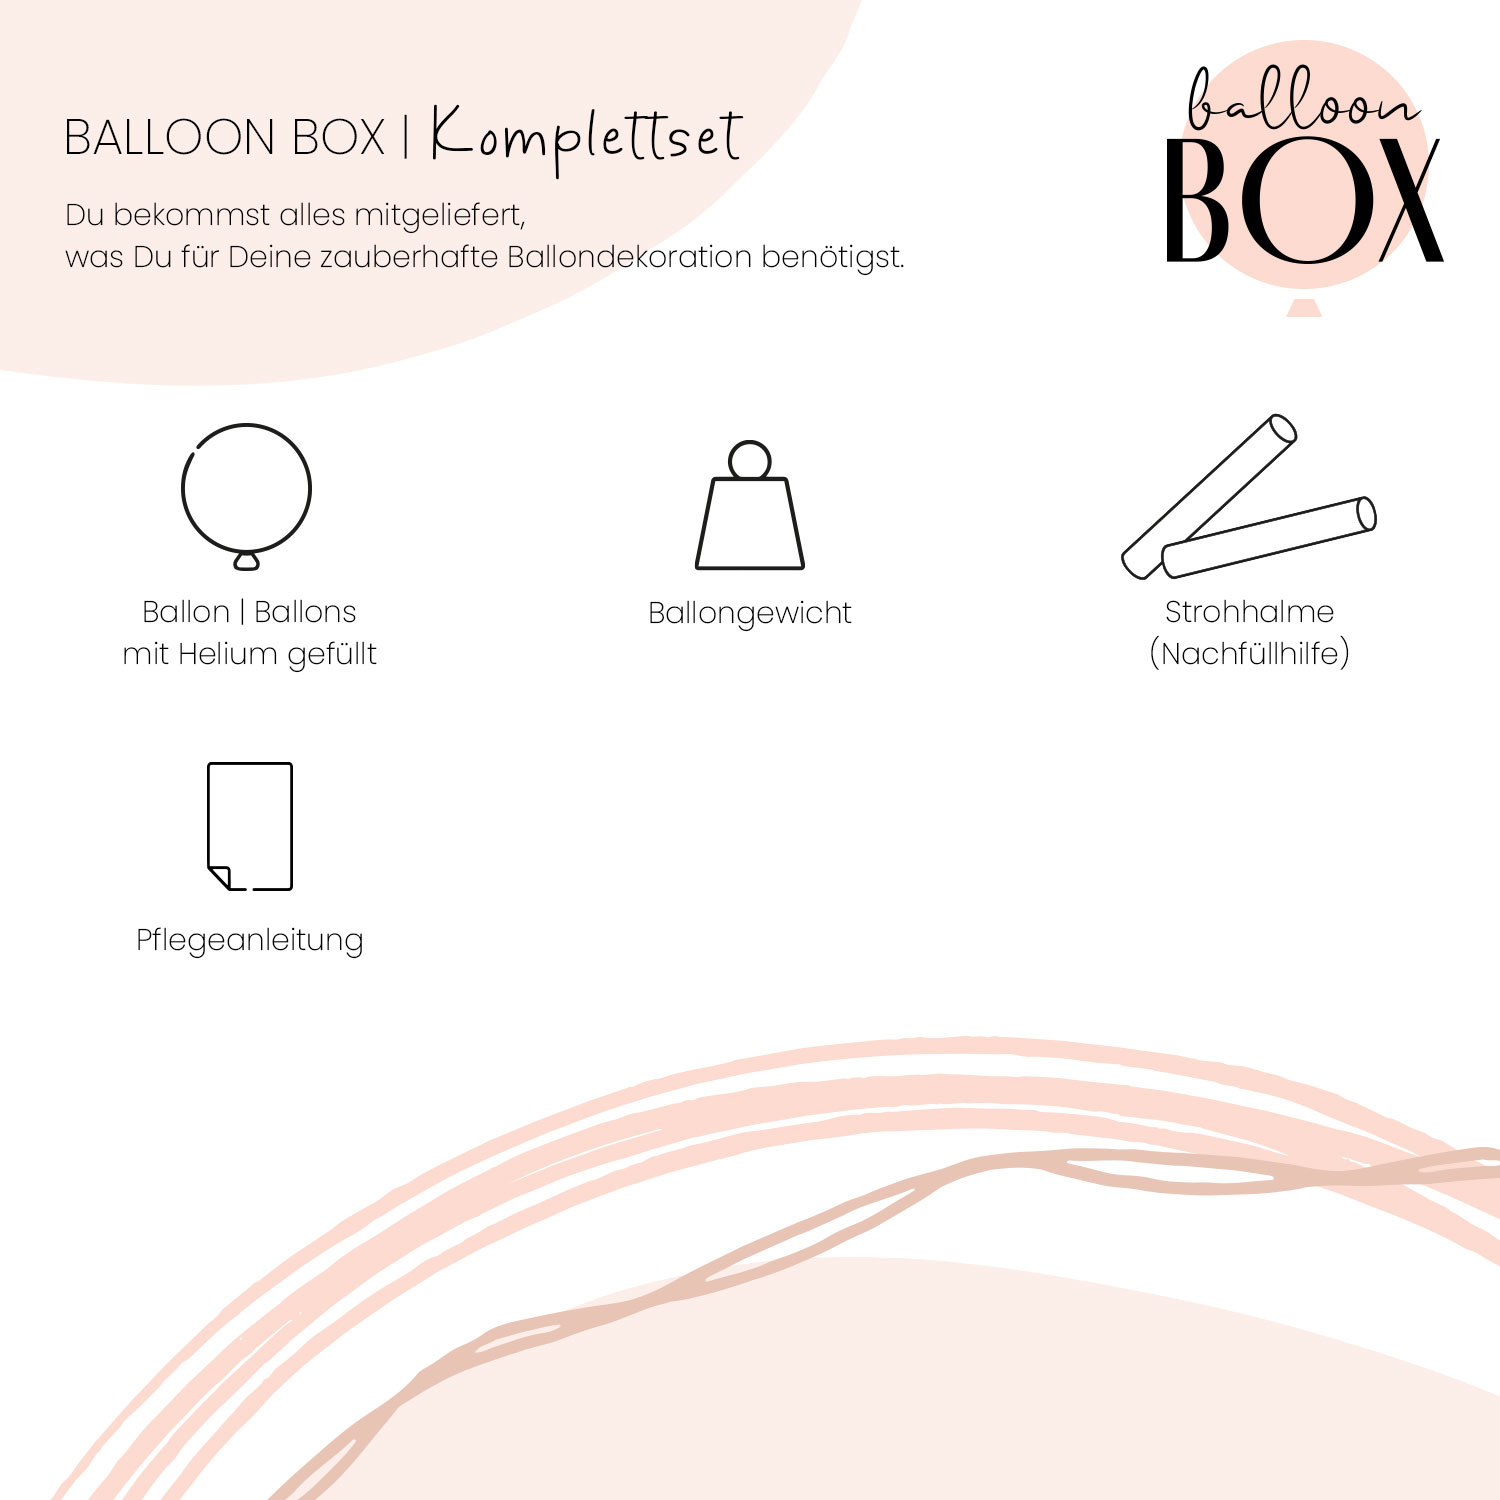 Heliumballon in a Box - Gute Besserung Boho